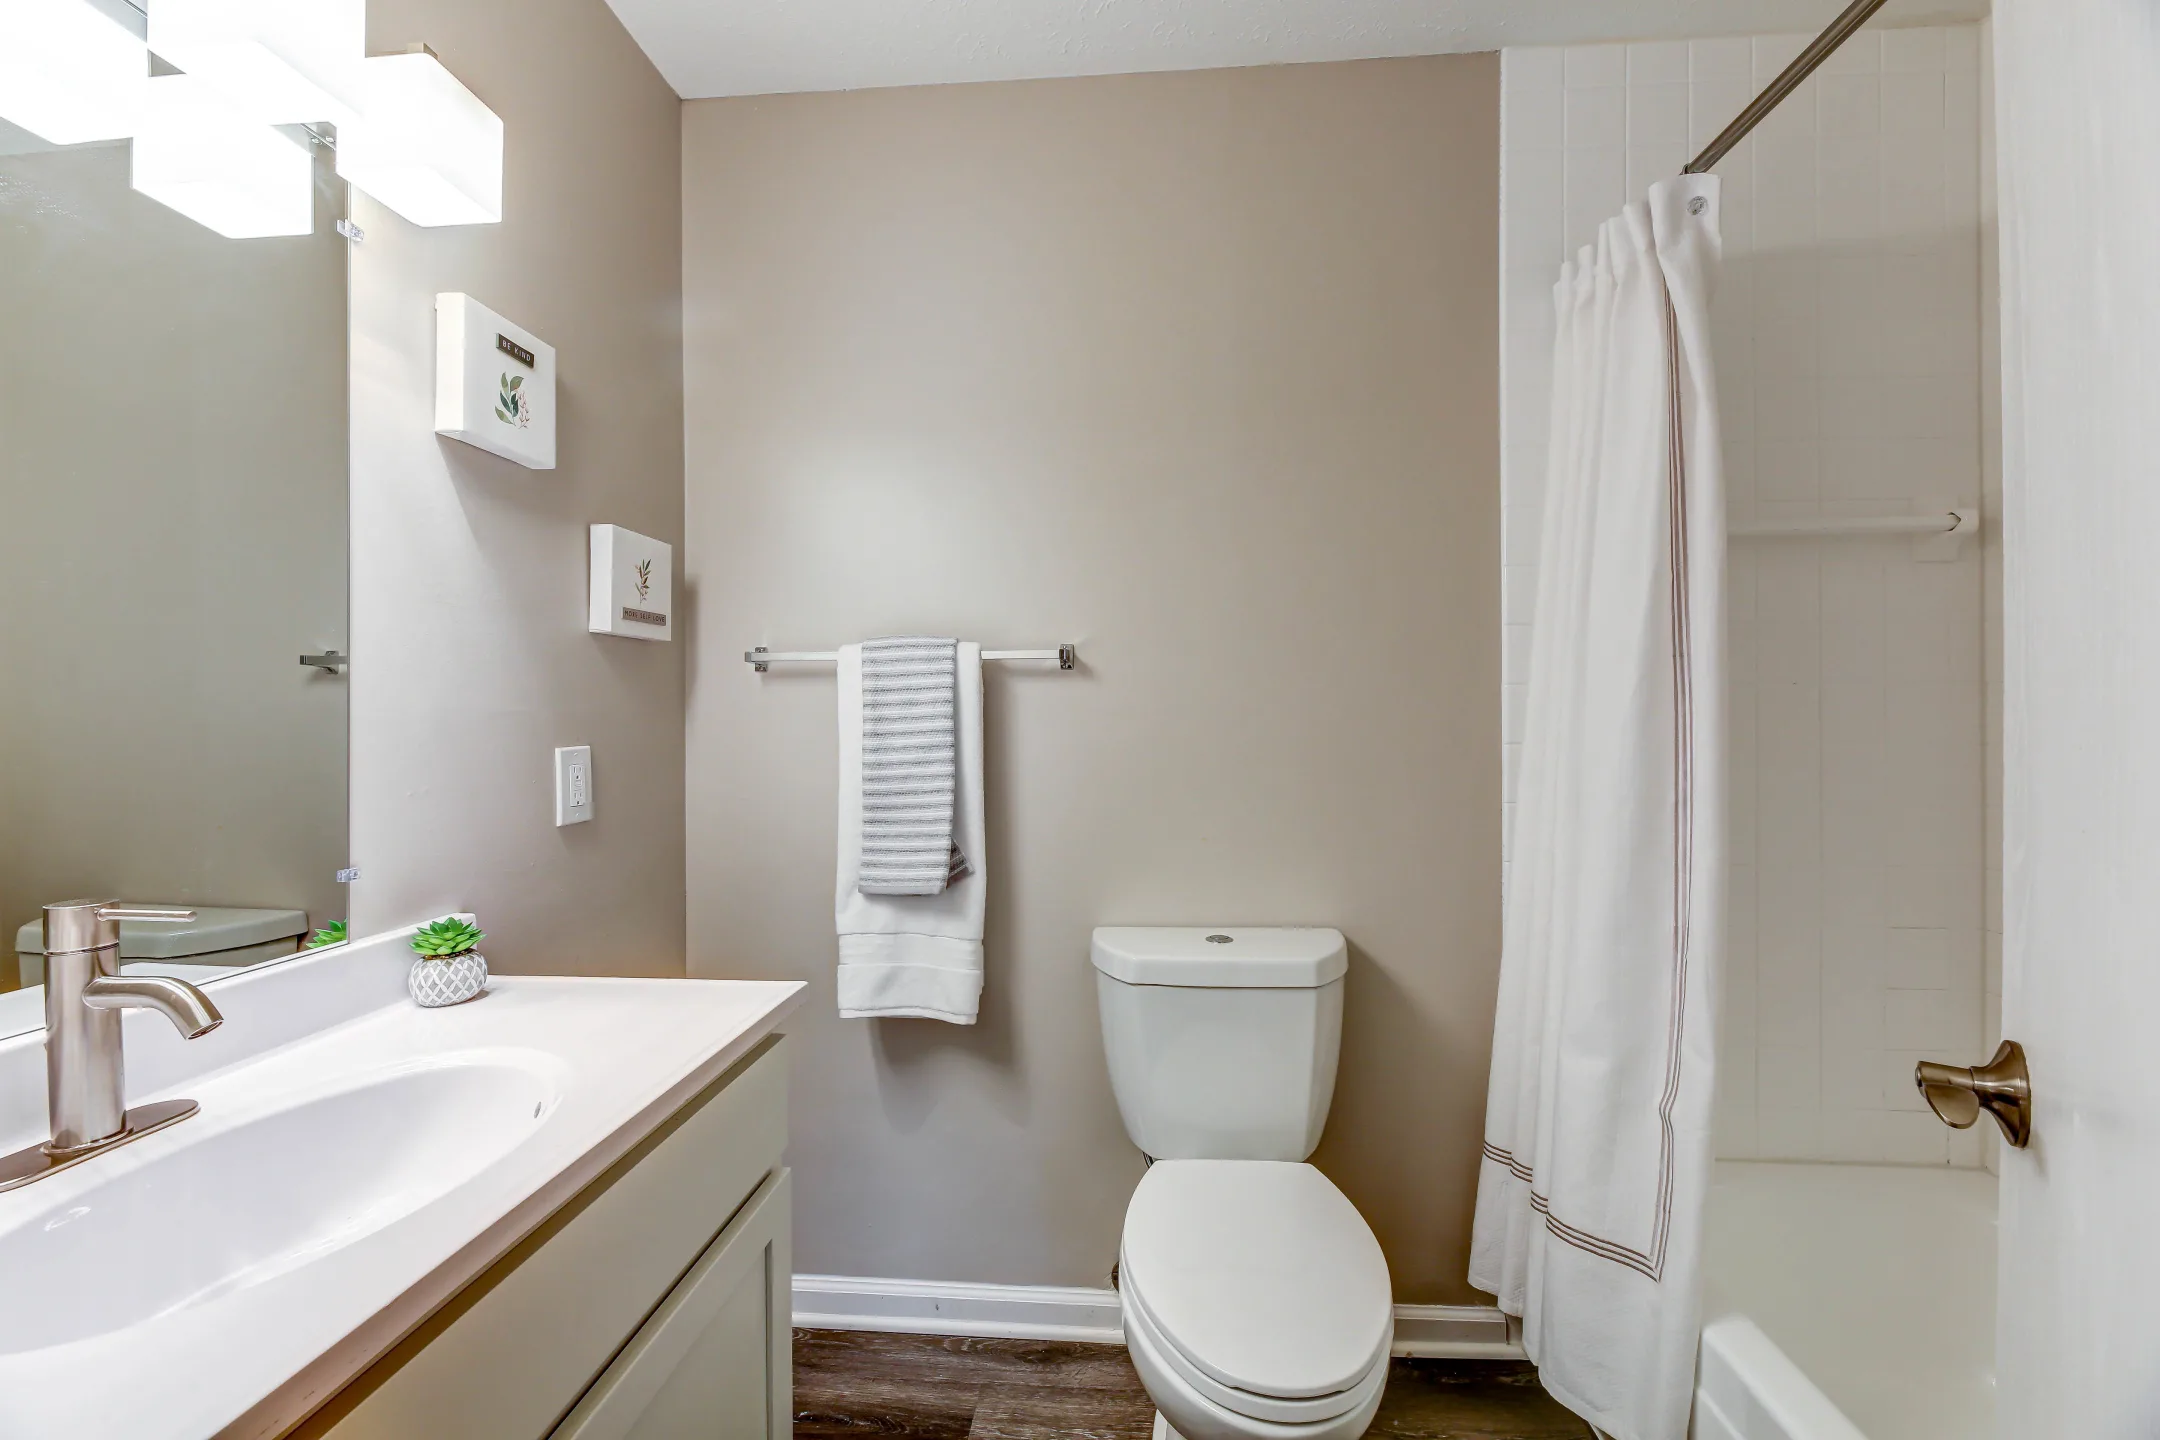 Bathroom - Jamestown Village Apartments - North Olmsted, OH